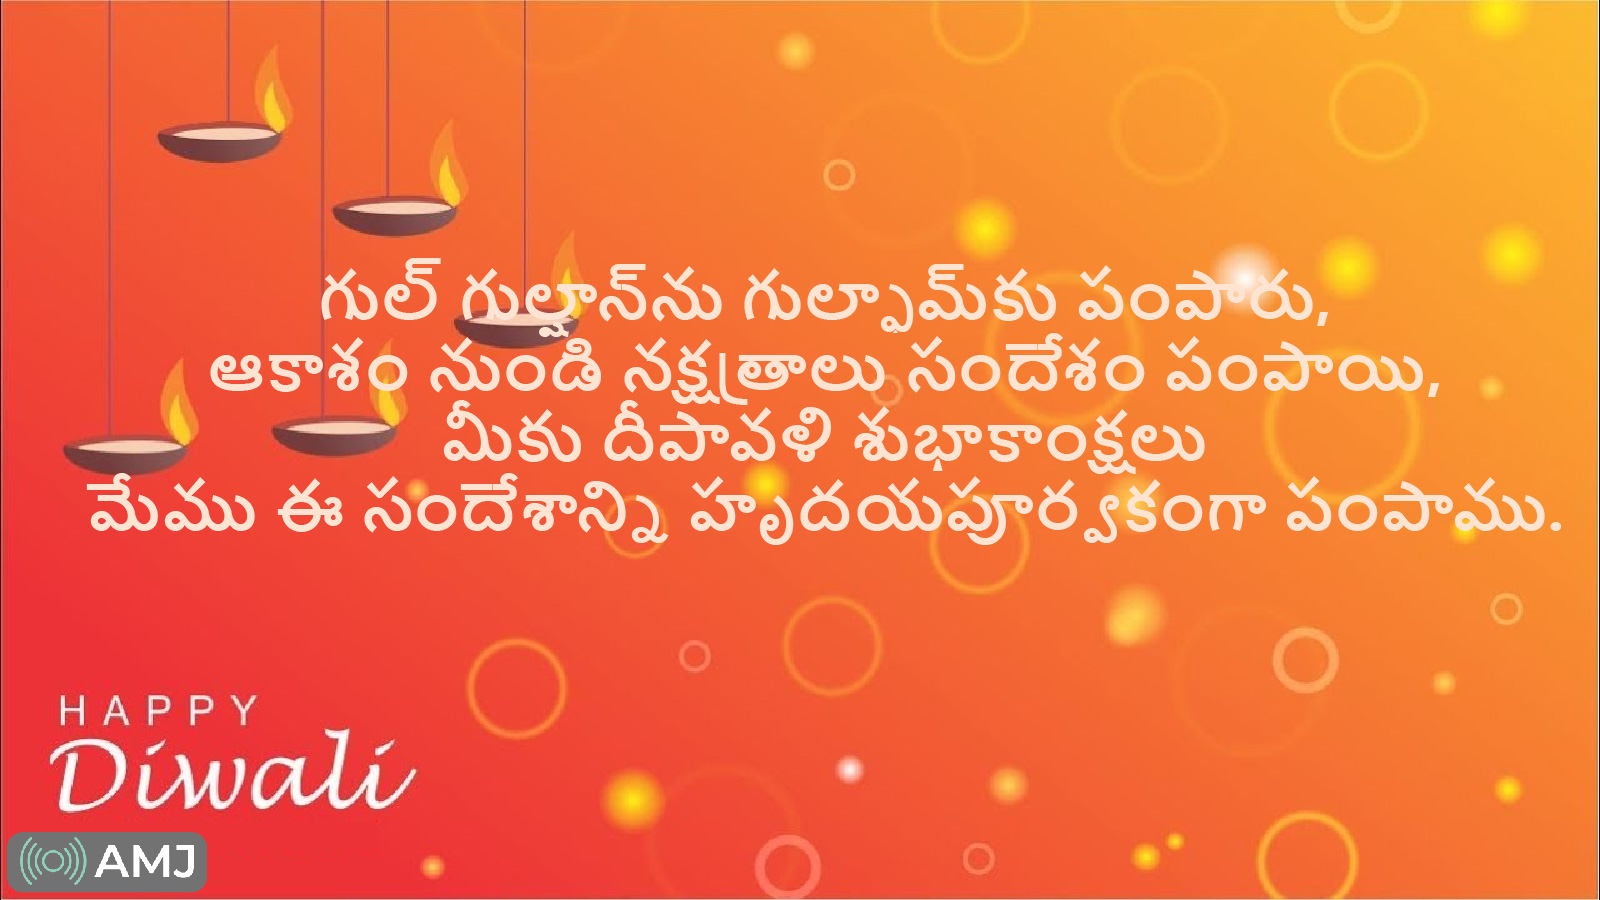 Deepavali Wishes in Telugu